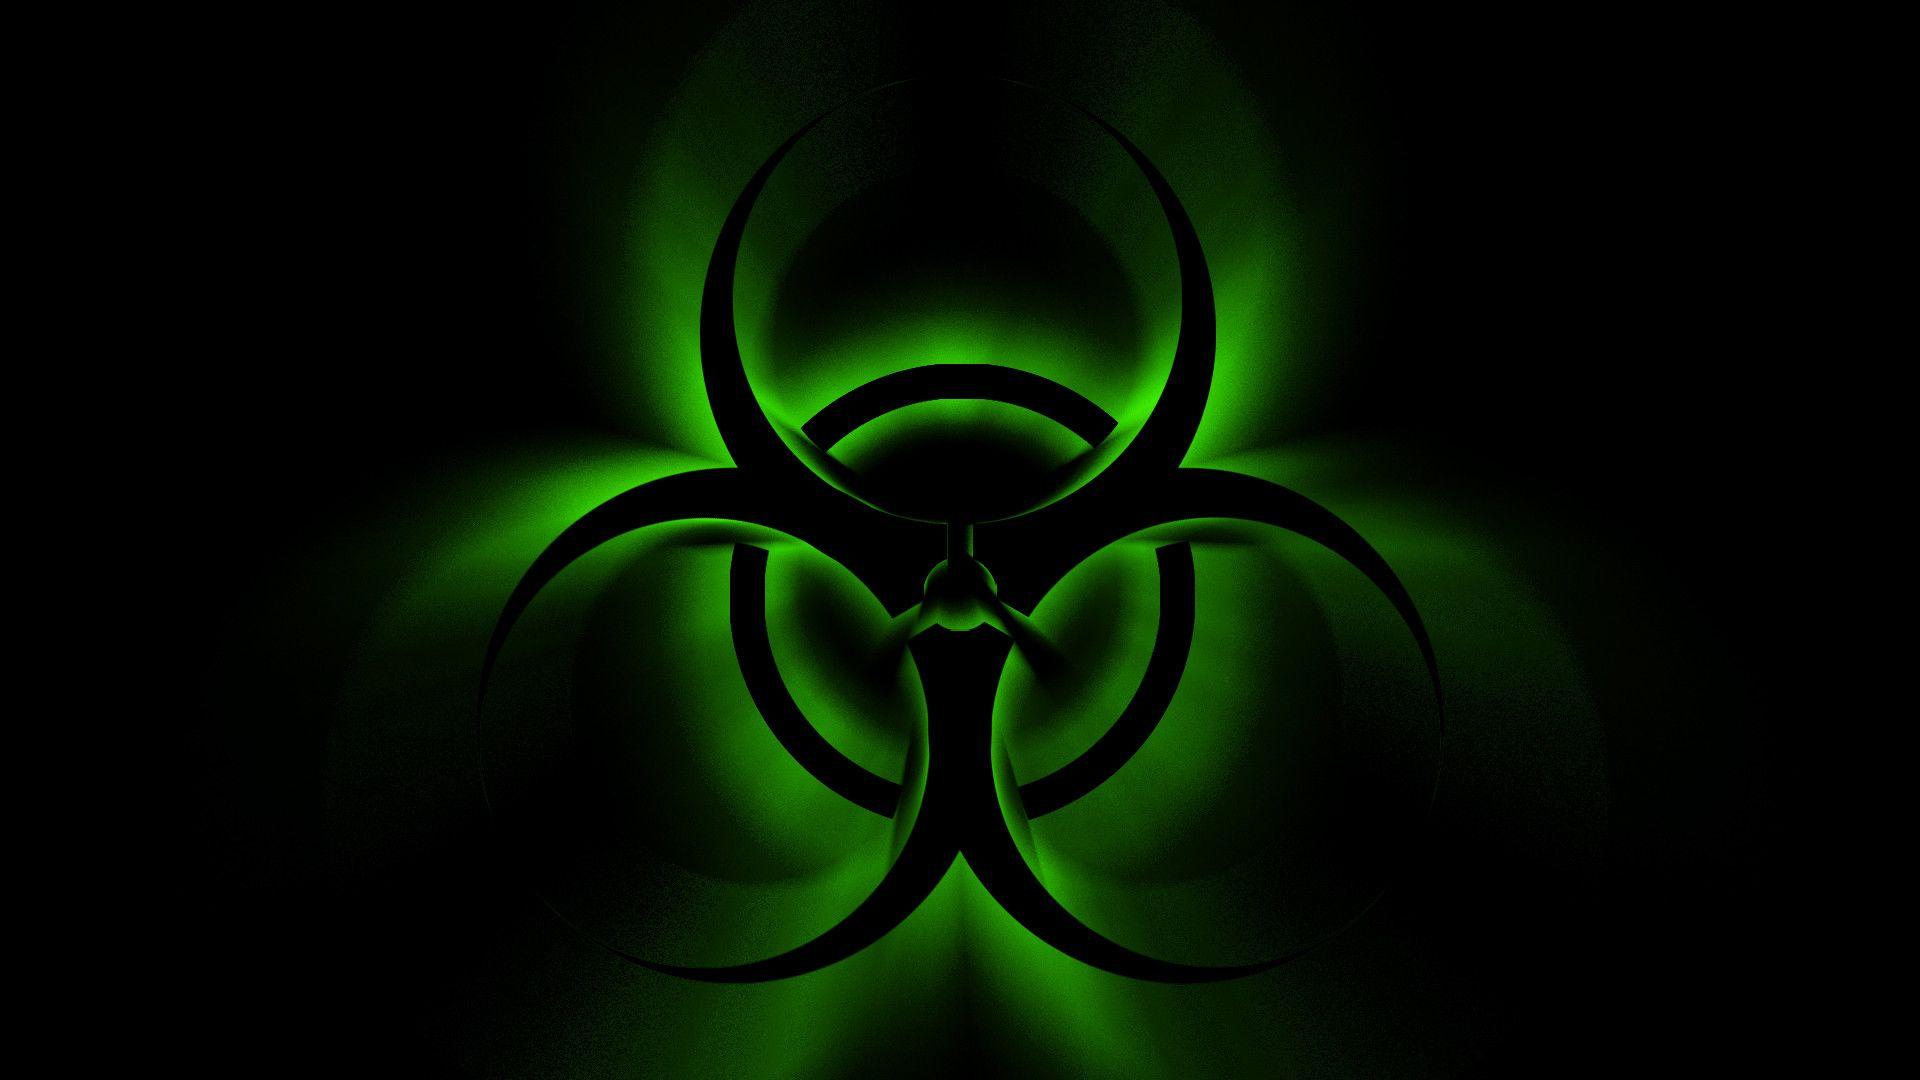 Wallpaper For > Biohazard Symbol Wallpaper